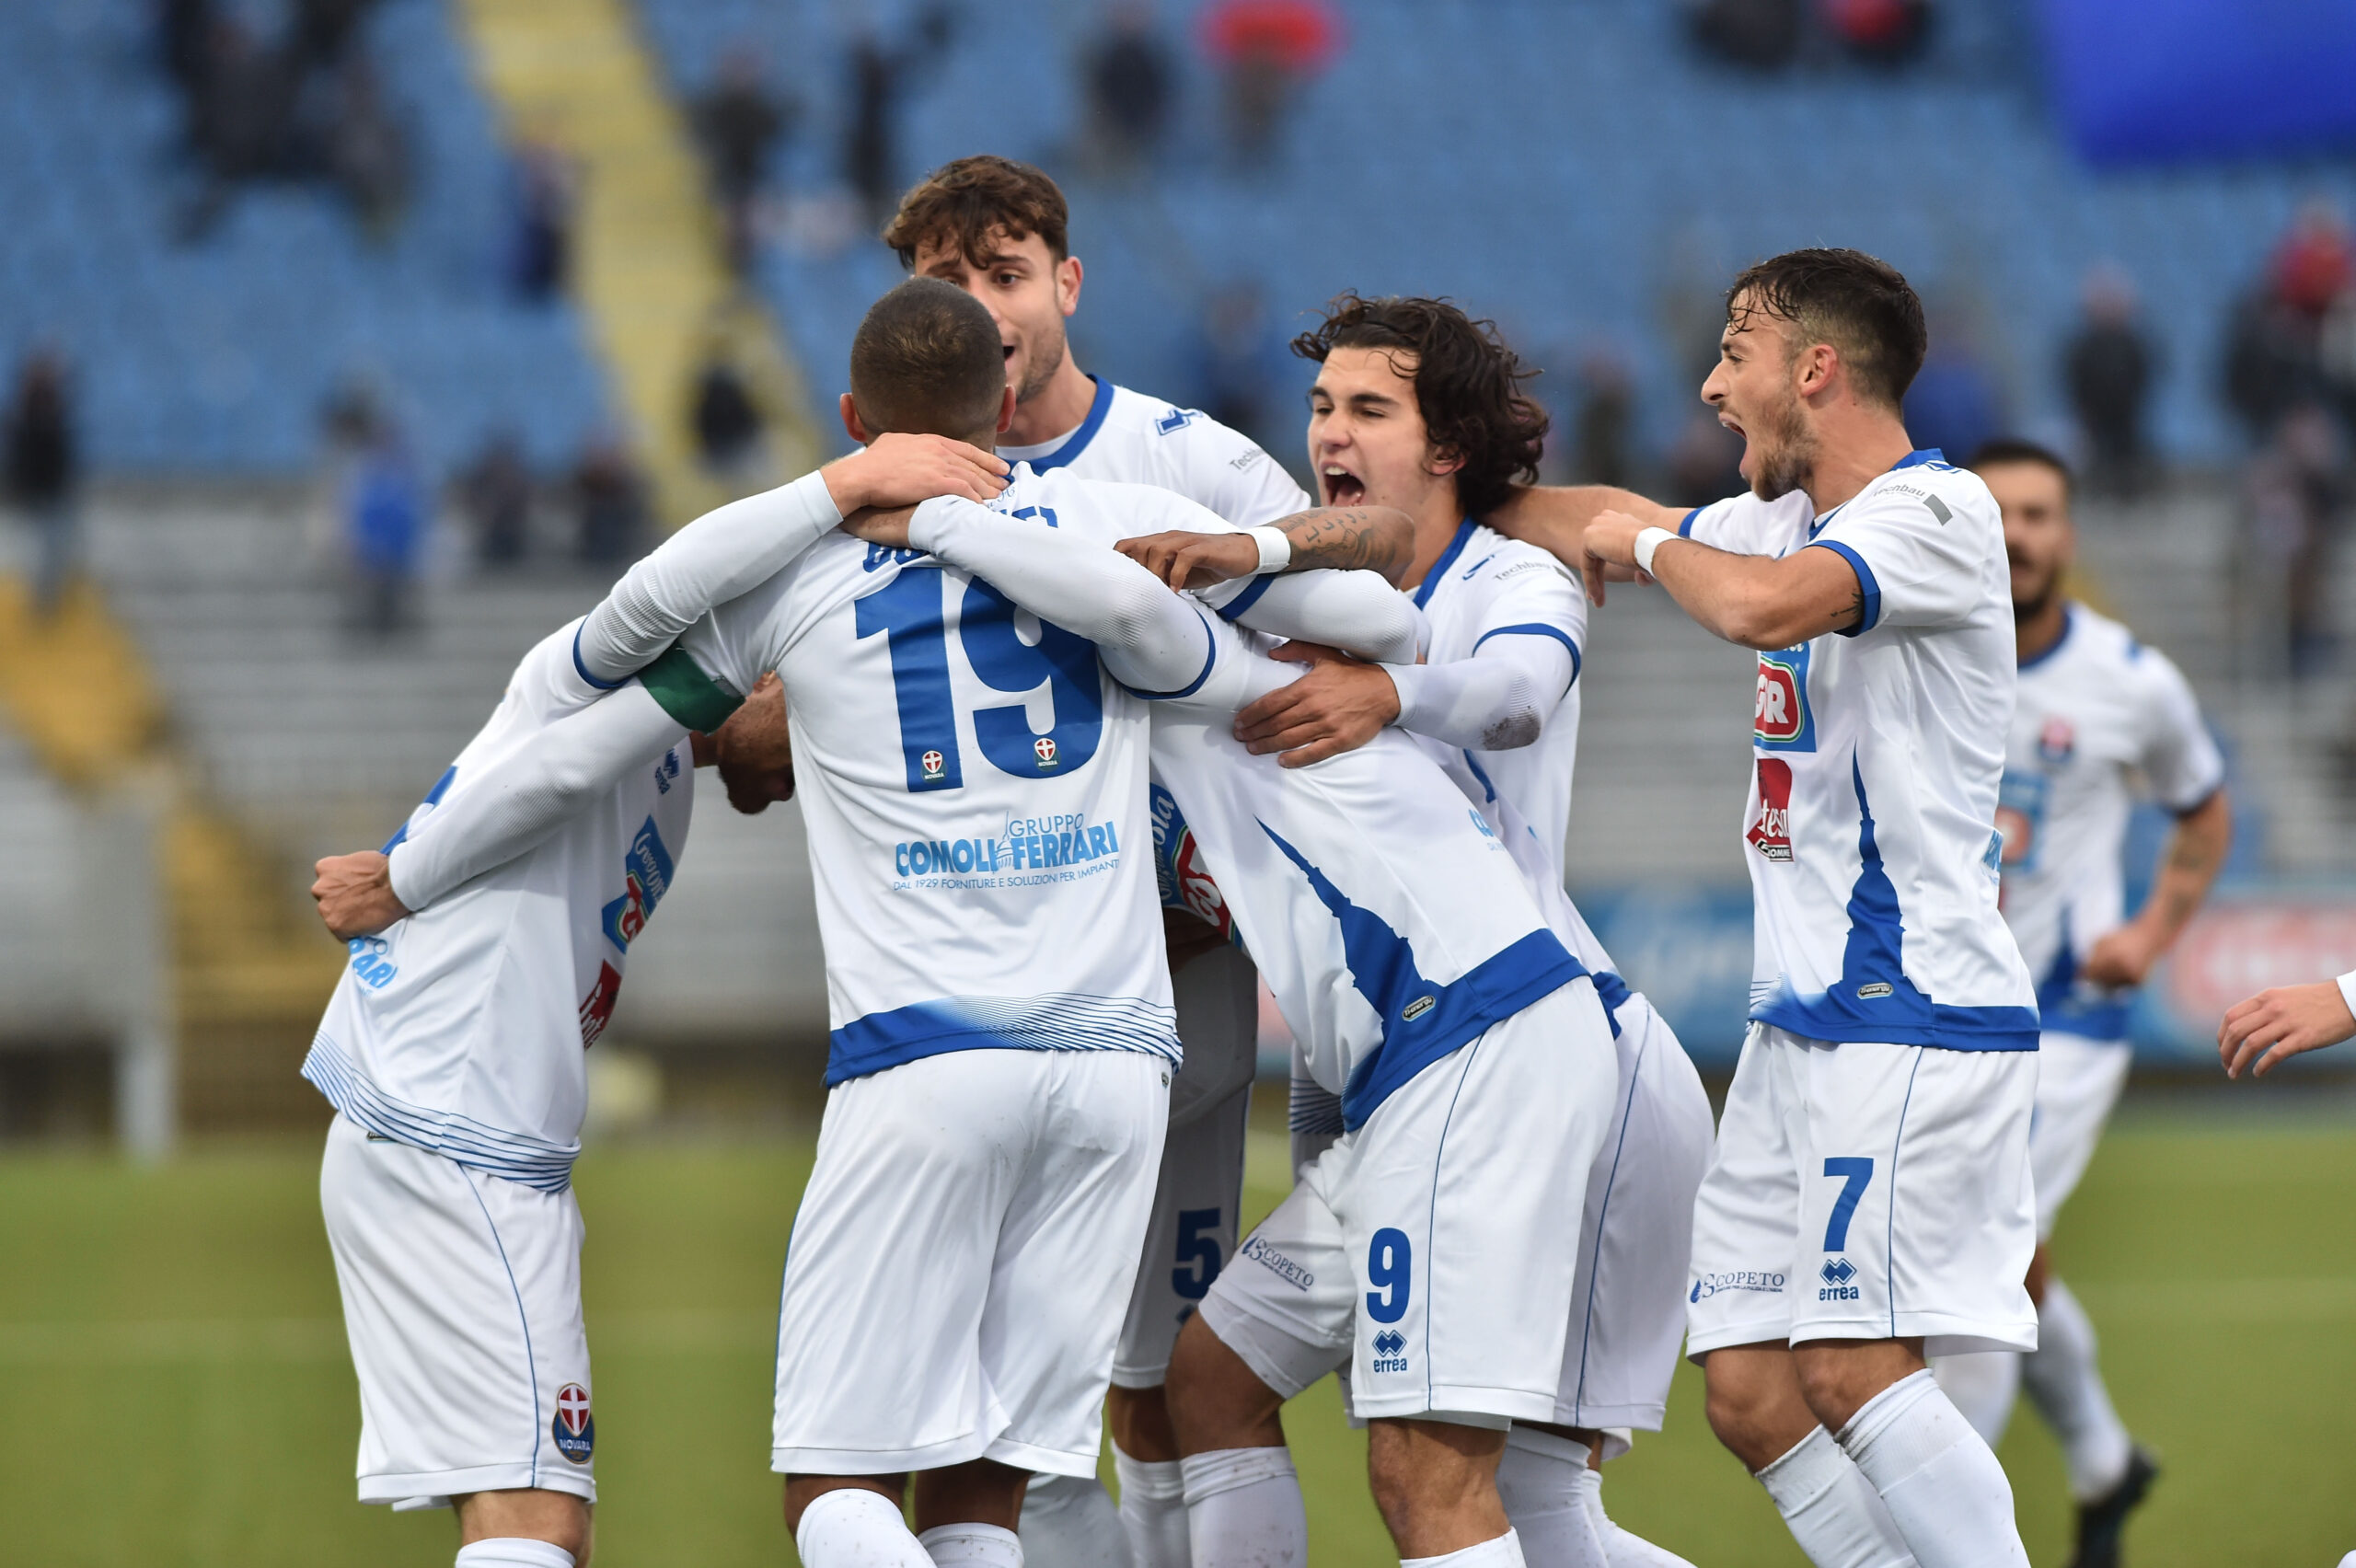 Read more about the article Novara-Casale 4-1 | Tabellino del match